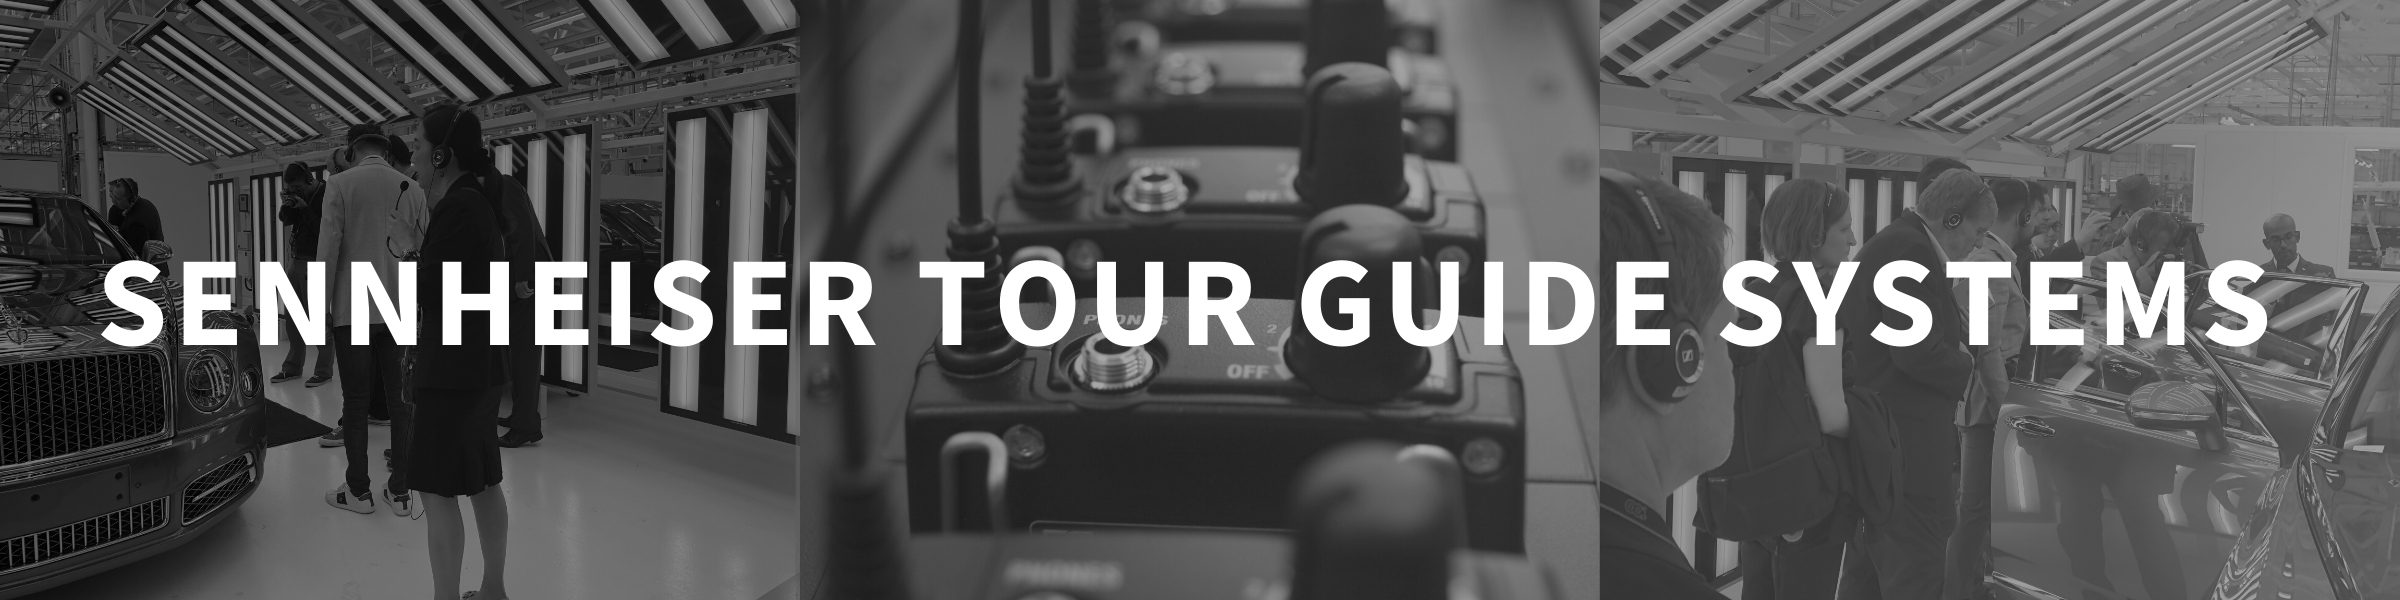 Sennheiser Tour Guide Systems 